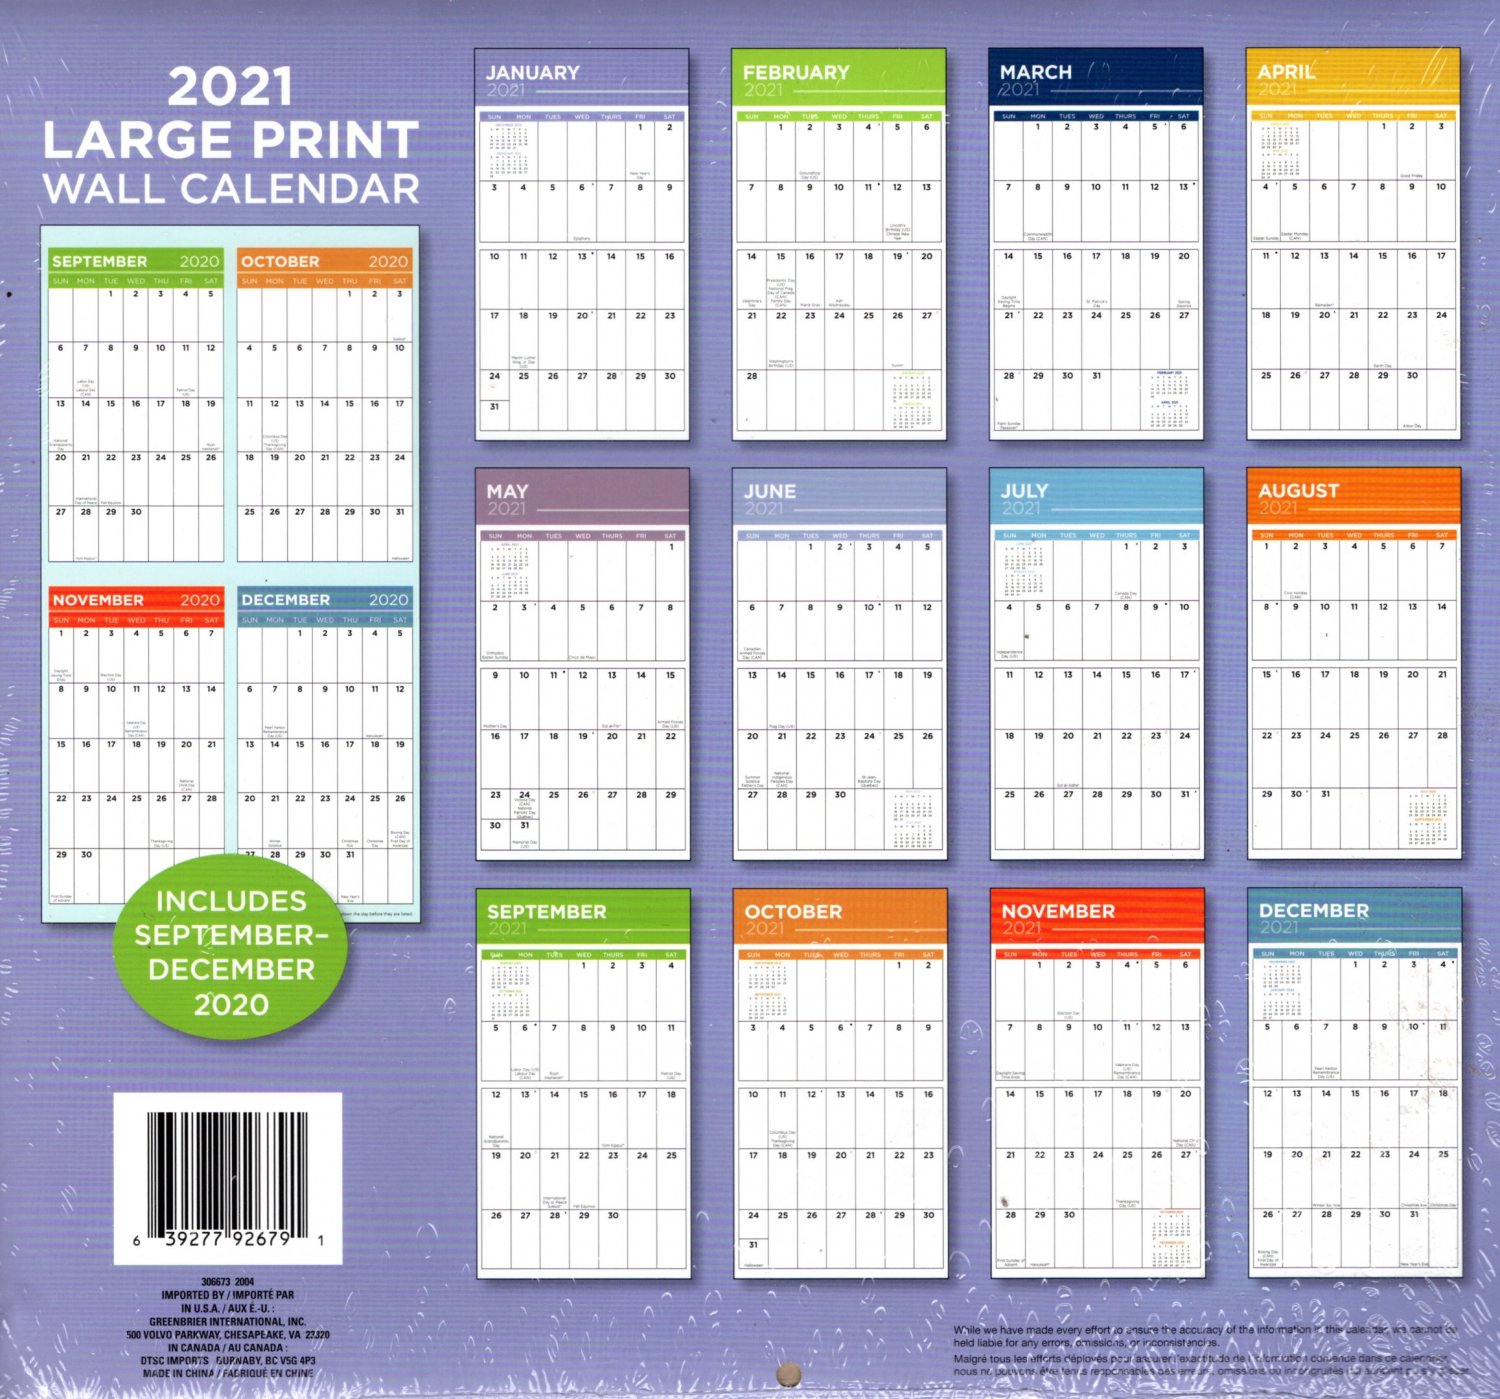 2021 16 Month Wall Calendar Large Print Calendar with 100 Reminder